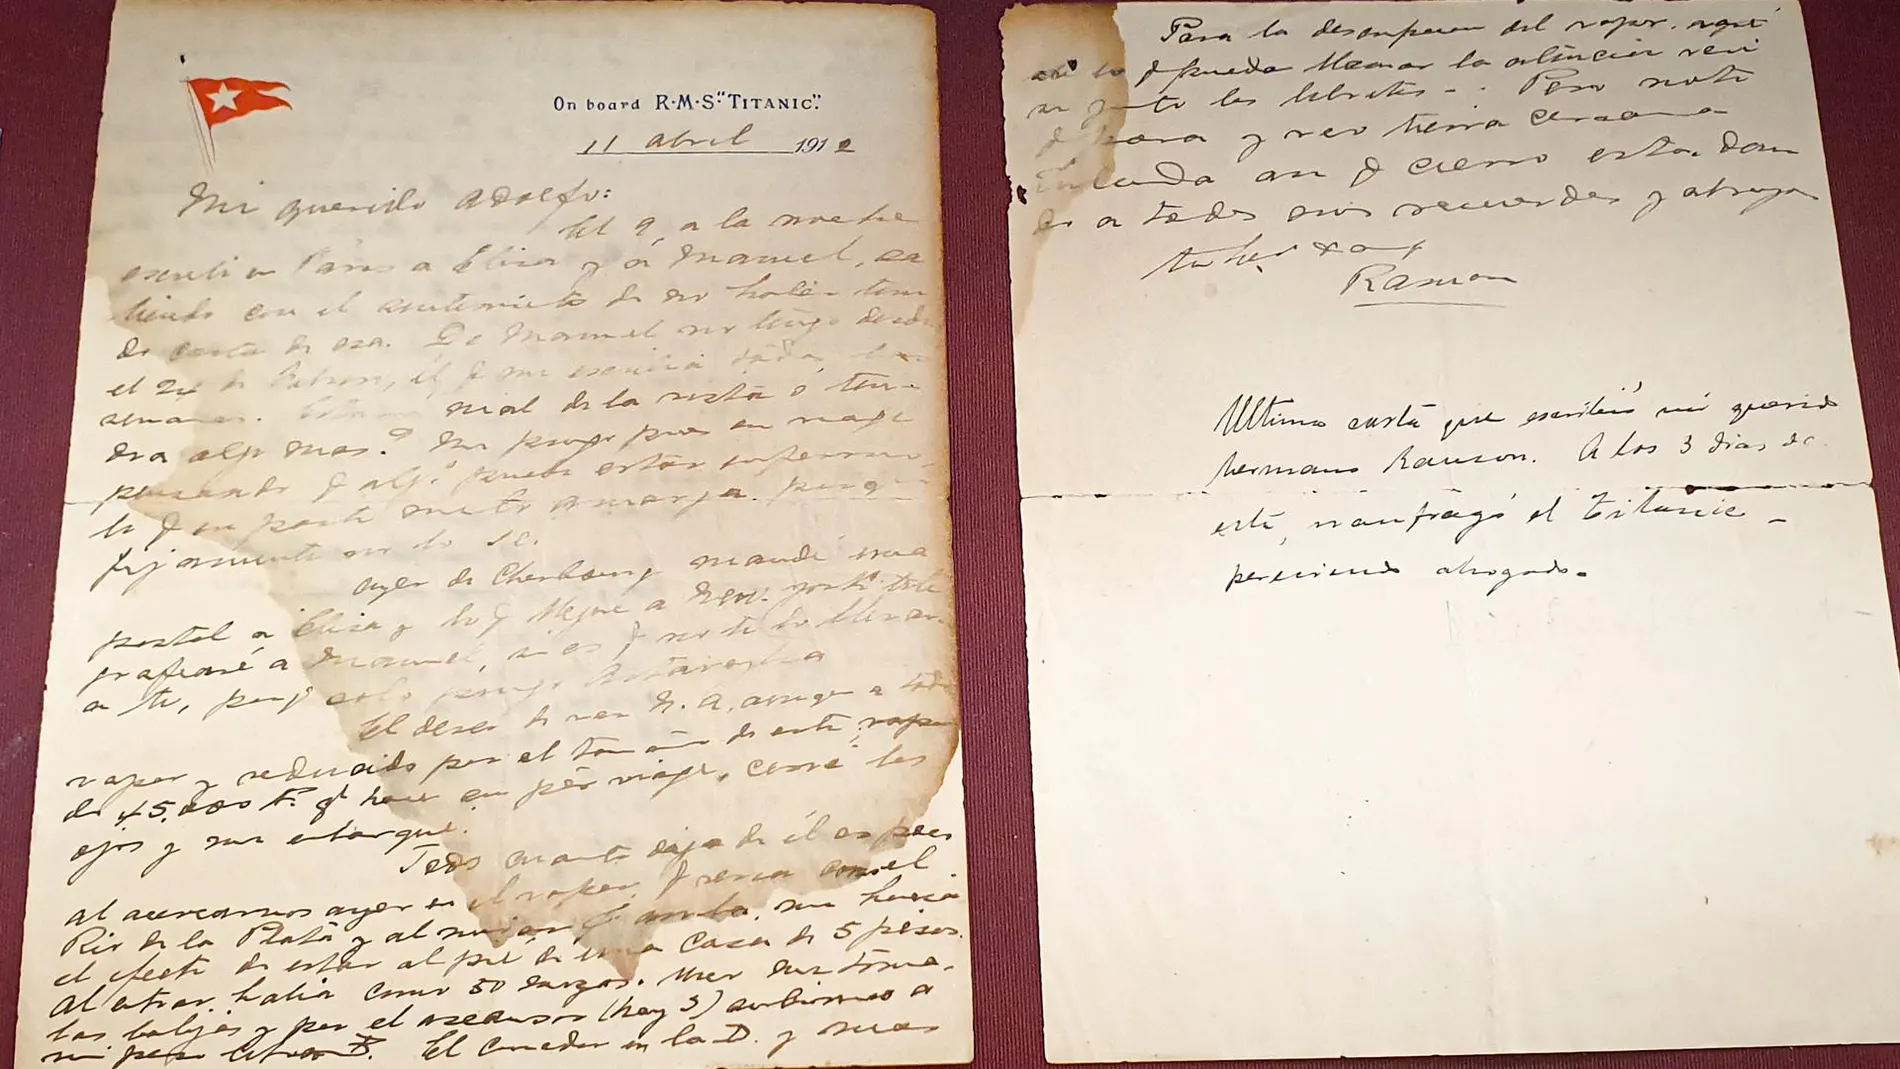 La carta que escribió un pasajero del Titanic el 11 de abril de 1912